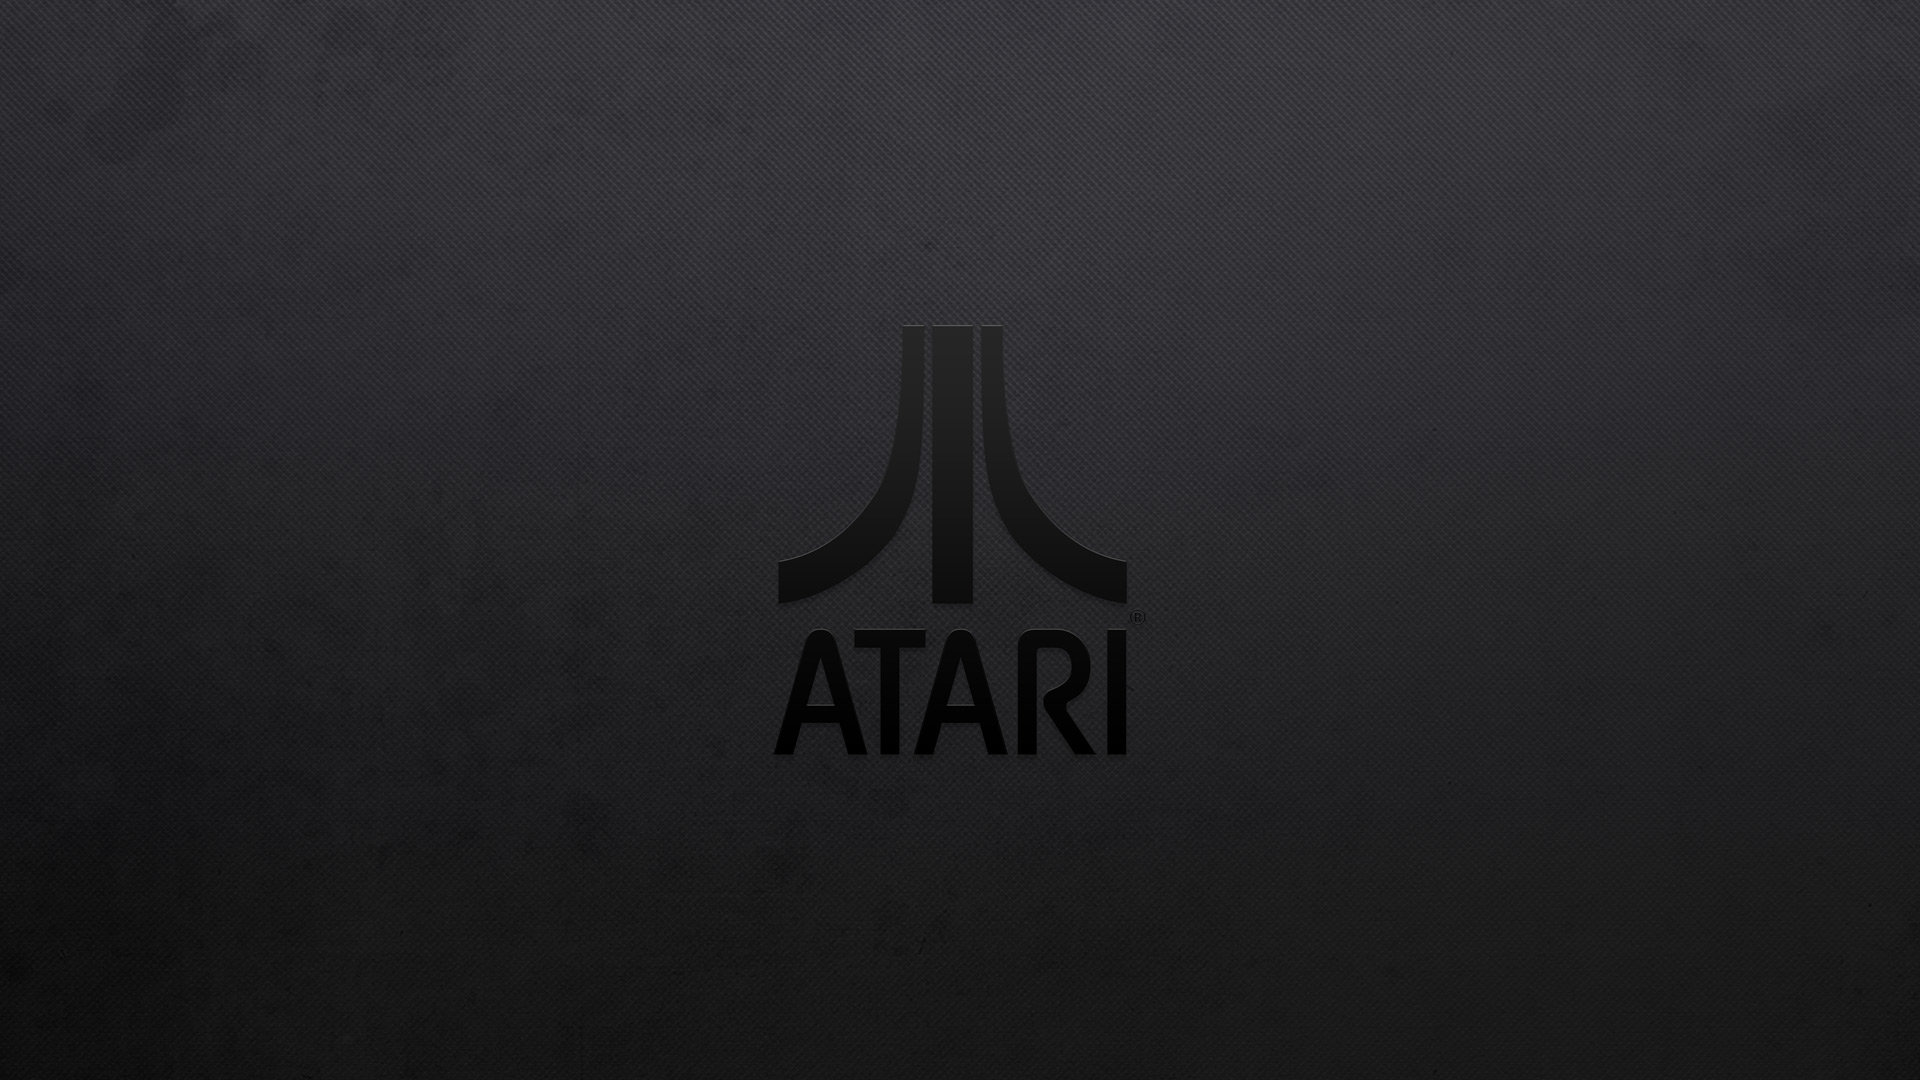 Download full hd 1920x1080 Atari desktop background ID:467490 for free